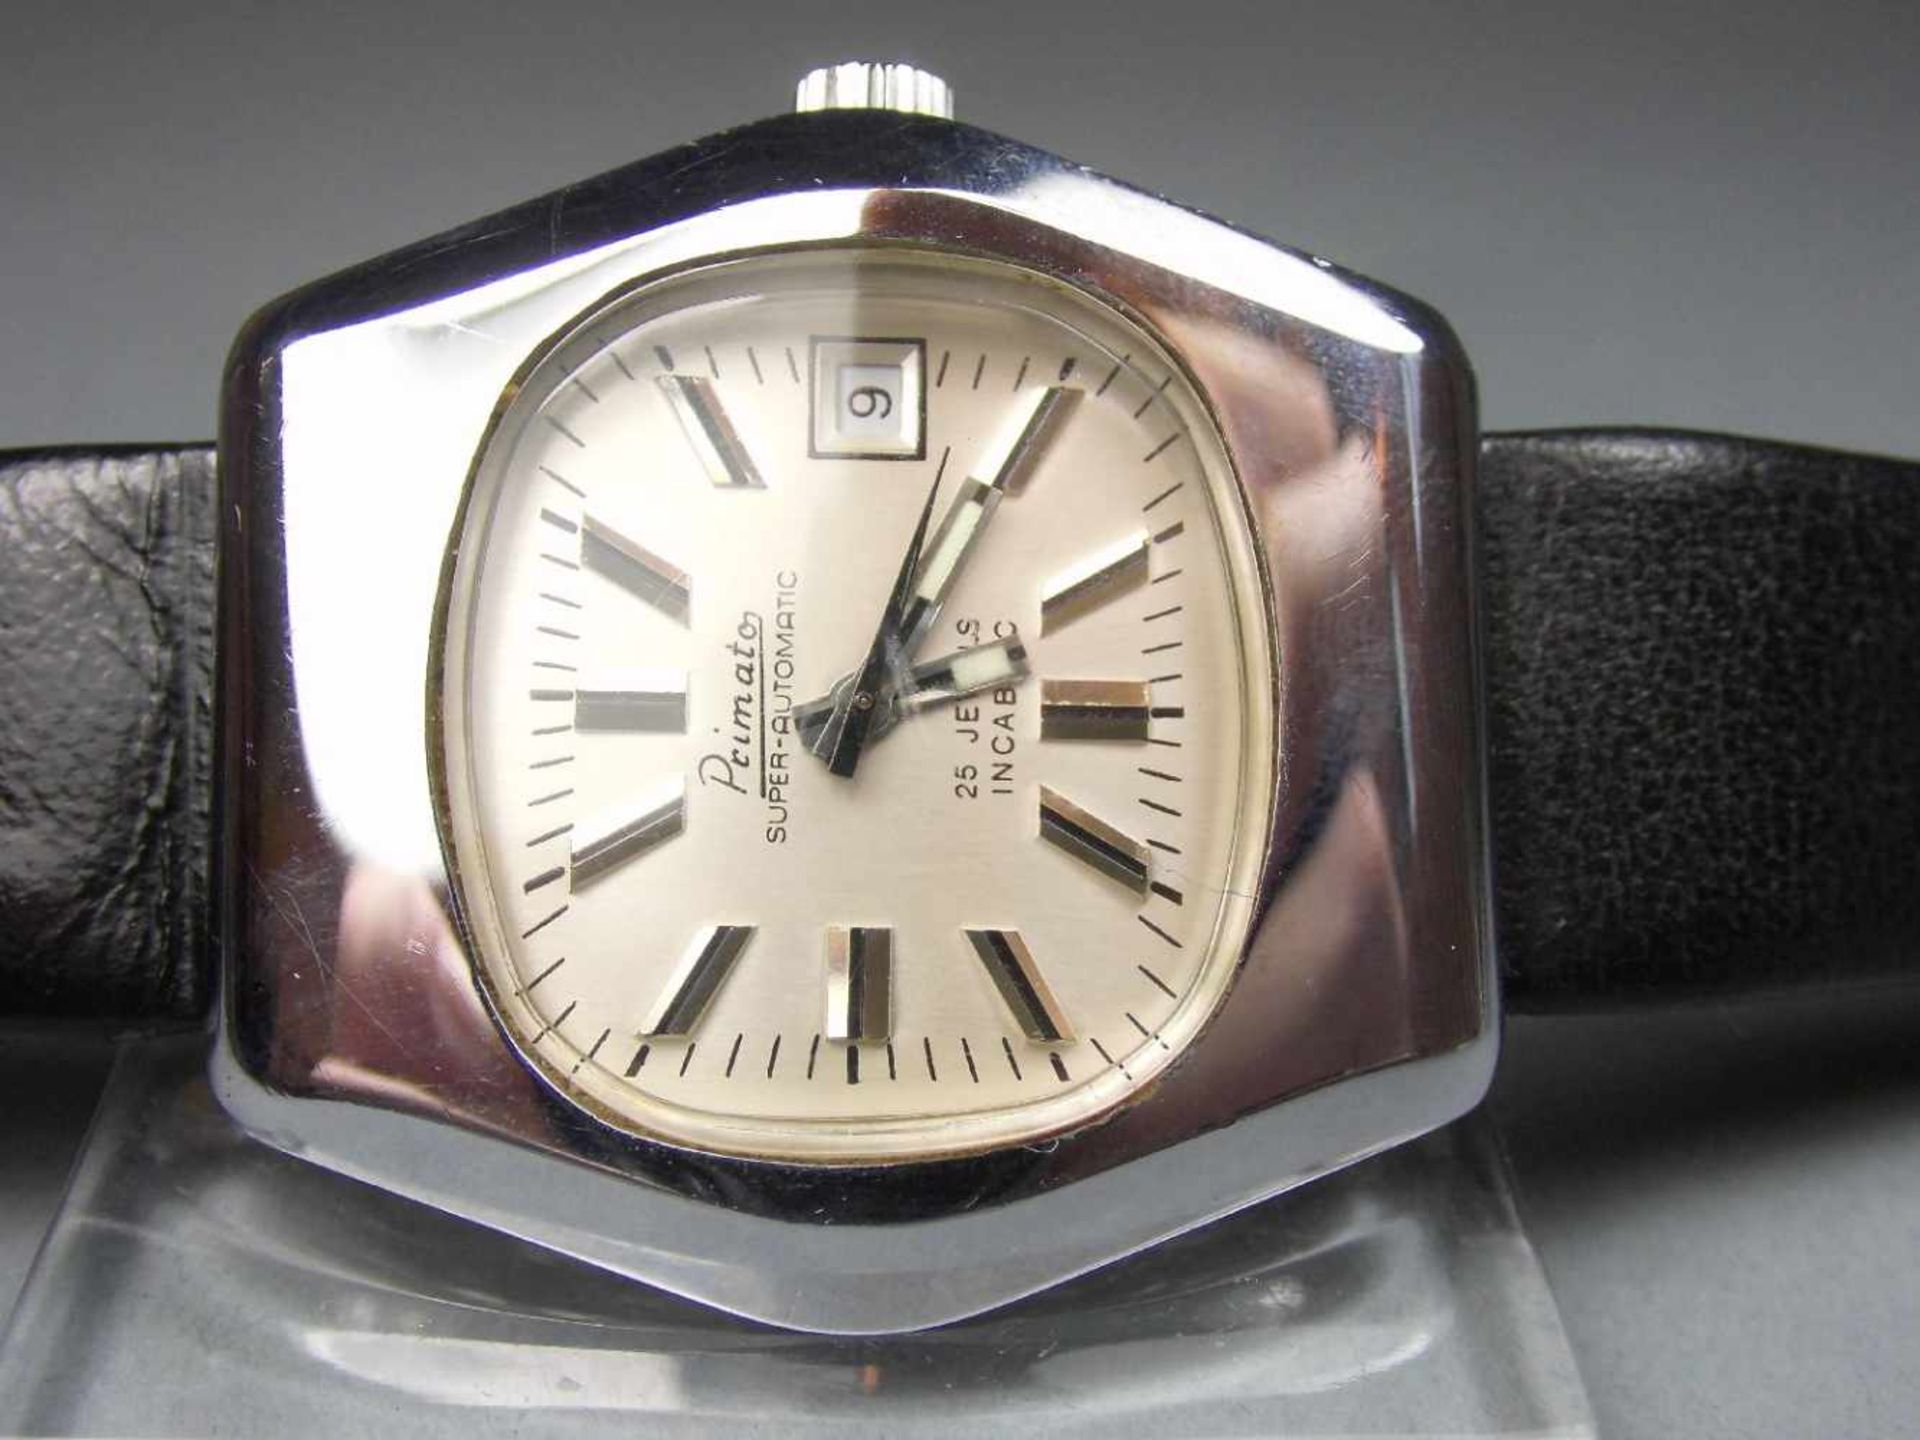 ARMBANDUHR: PRIMATO SUPER-AUTOMATIC / wristwatch, Manufaktur Ewald Fleck & Co. KG / Pforzheim. - Bild 3 aus 7